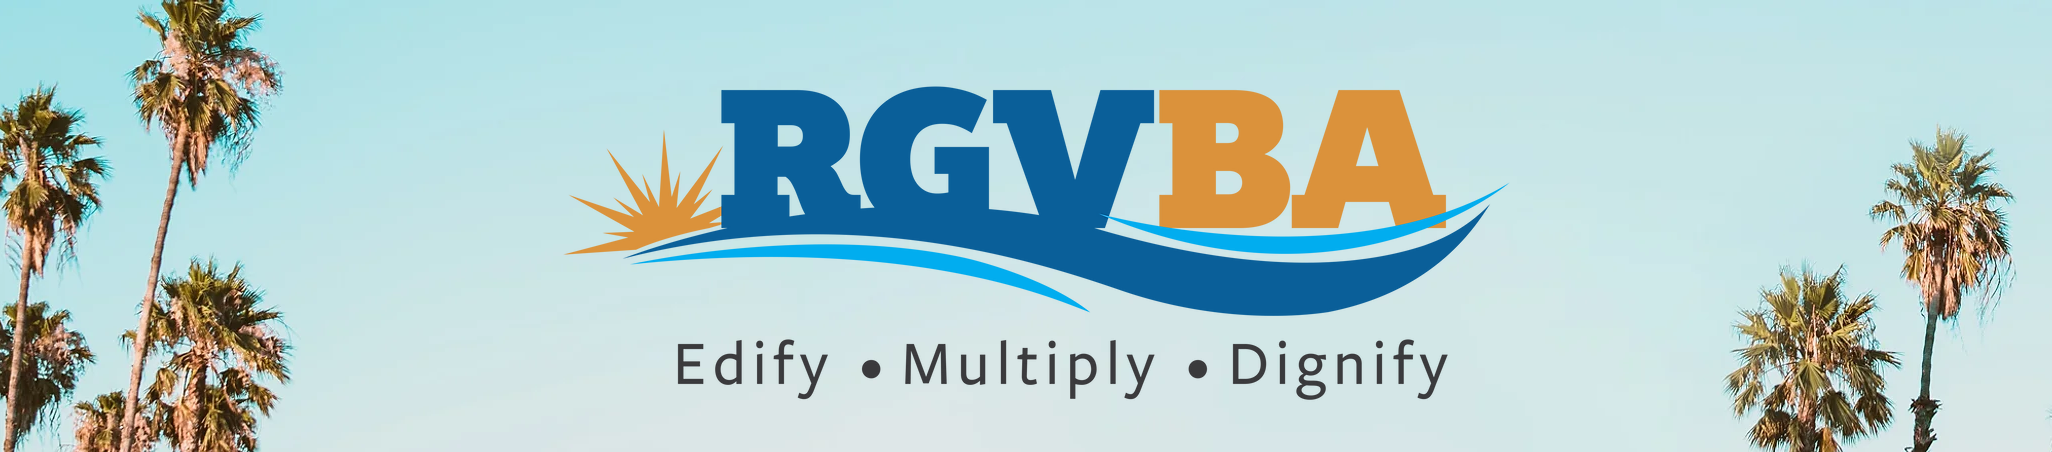 RGVBA / edify - multiply - dignify